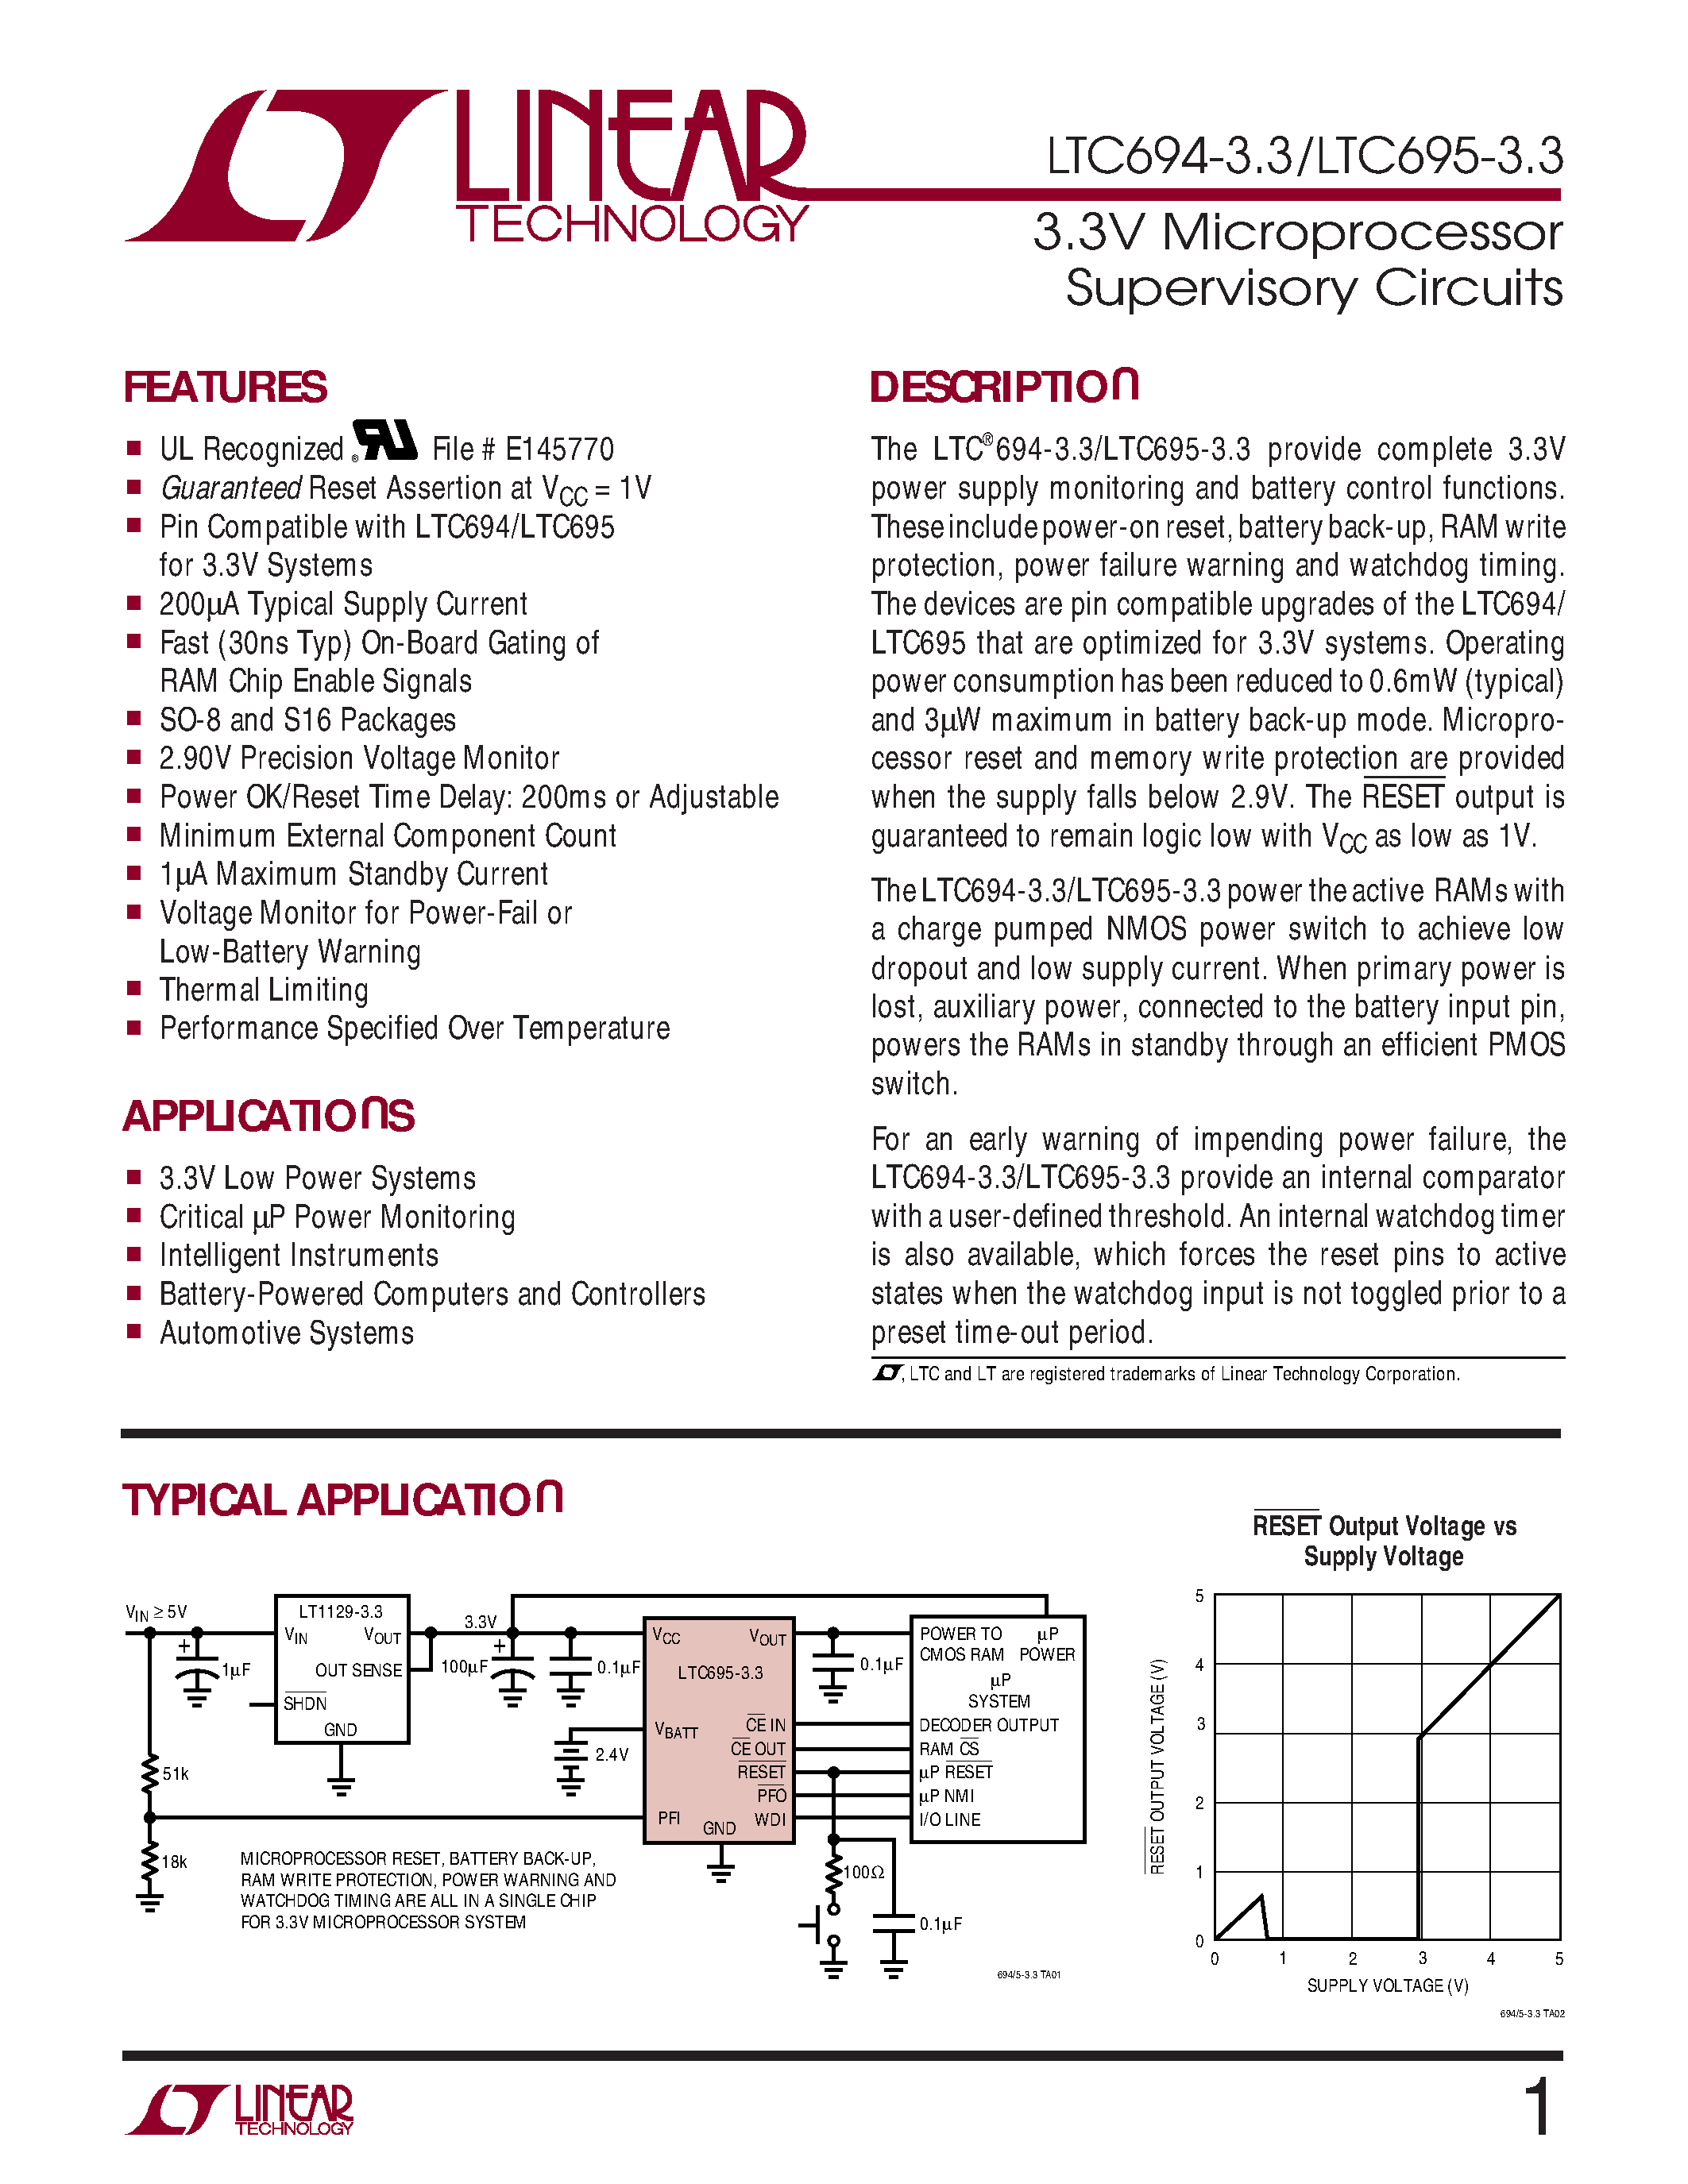 Datasheet LTC695-3.3 - 3.3V Microprocessor Supervisory Circuits page 1